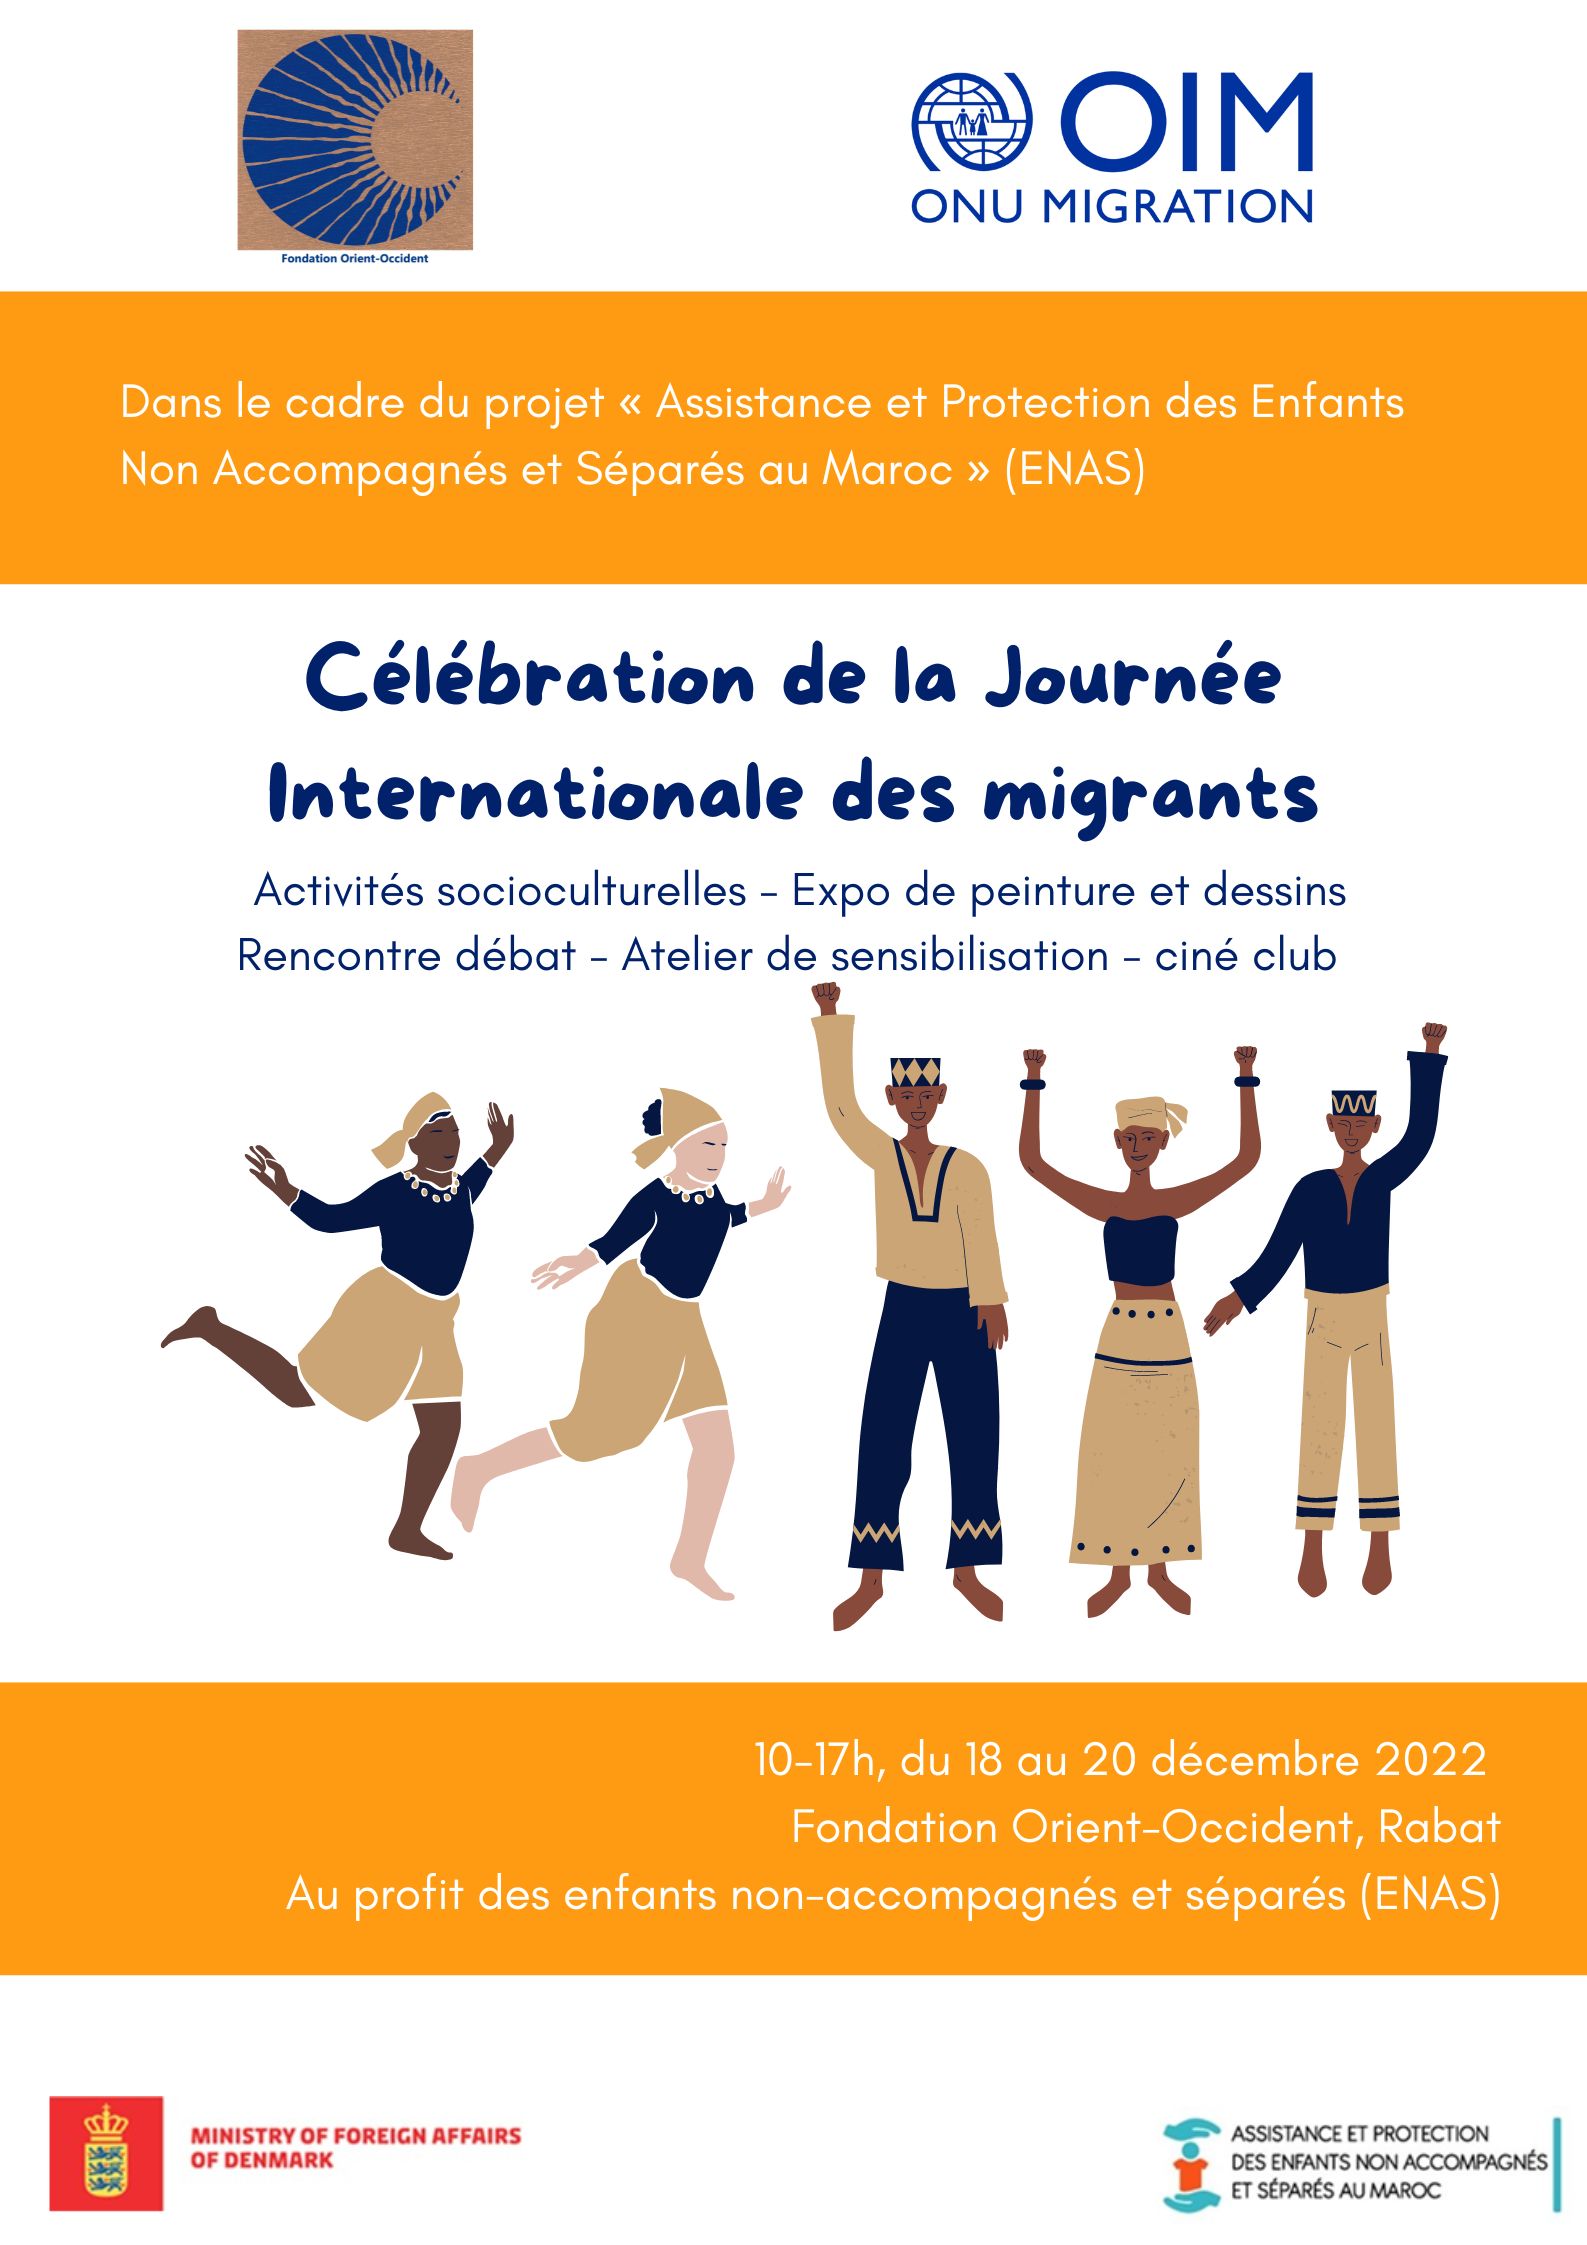 Celebrating the International Migrants Day